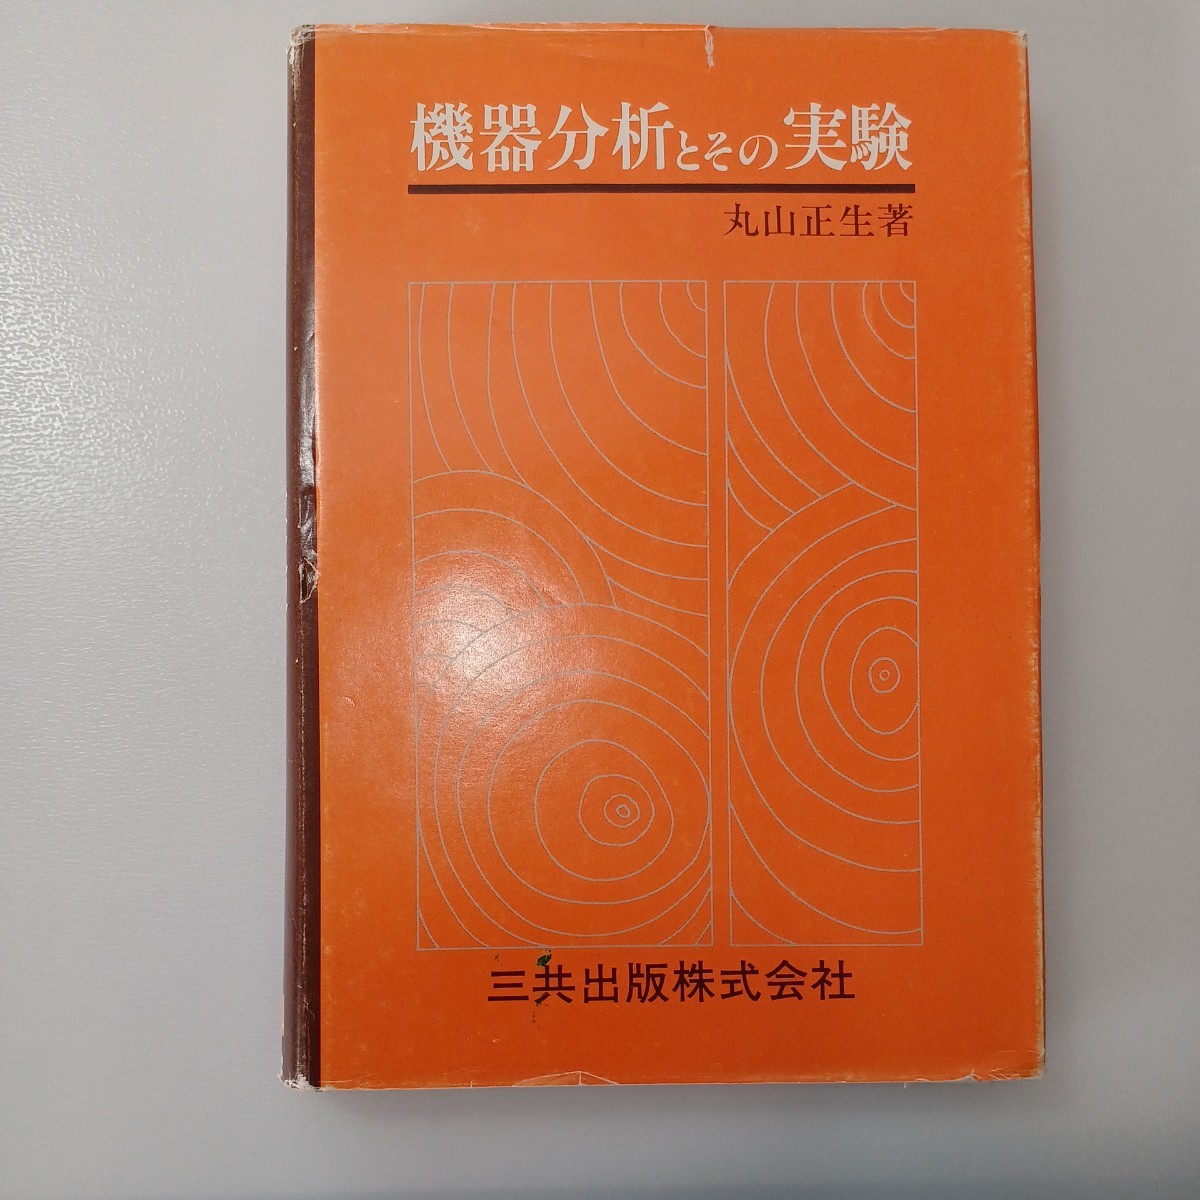 zaa-535♪機器分析とその実験 　丸山正生(著) 　三共出版（1991/03発売）初版第4刷